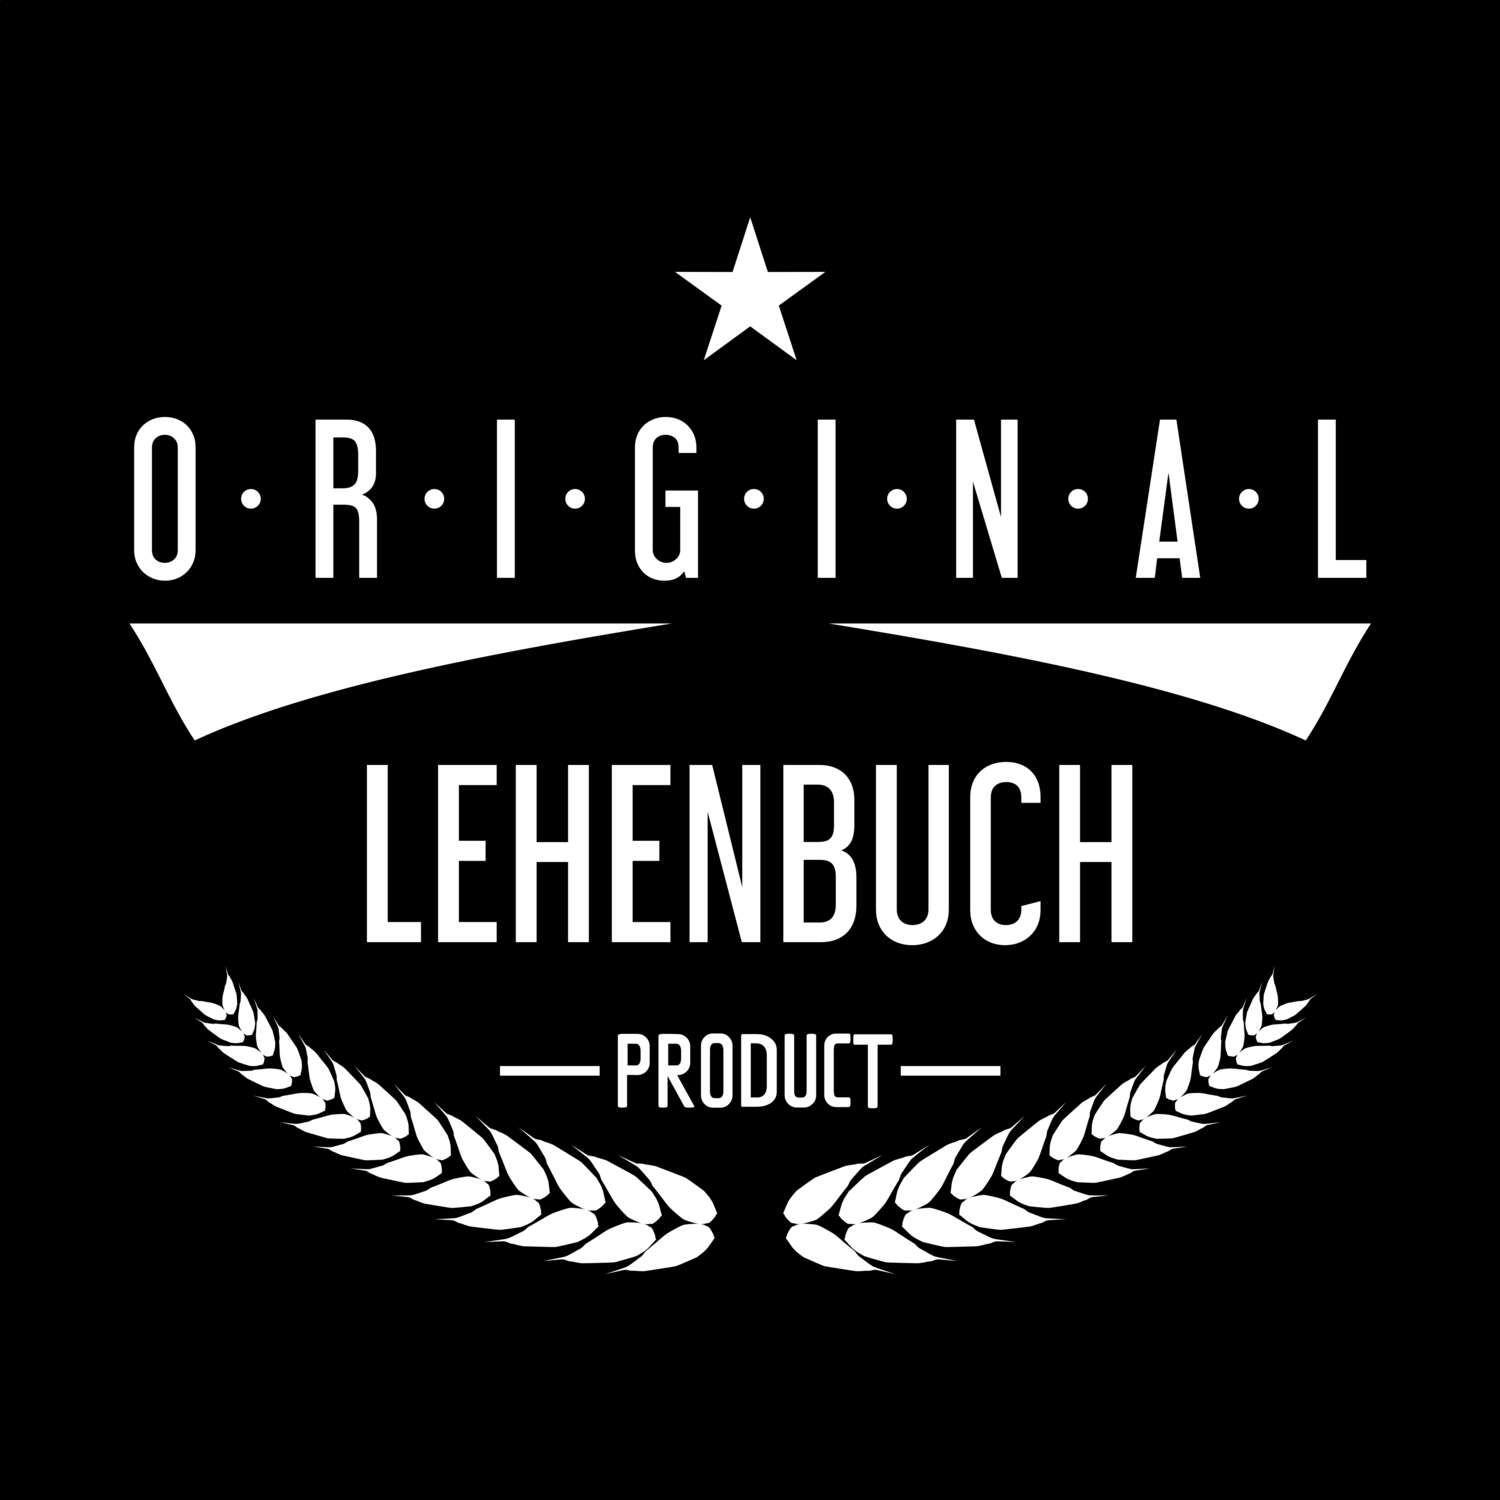 Lehenbuch T-Shirt »Original Product«